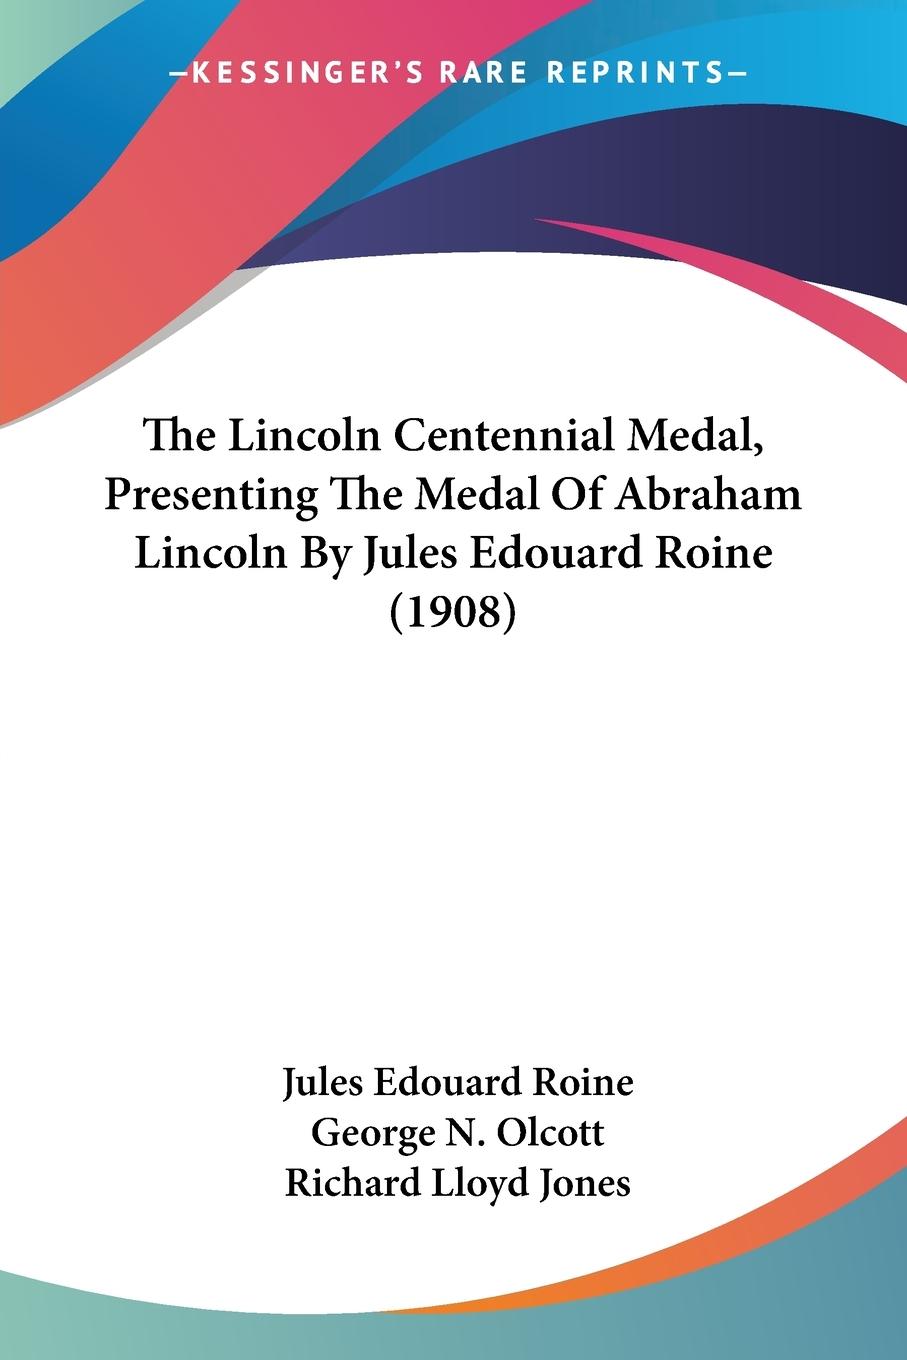 The Lincoln Centennial Medal, Presenting The Medal Of Abraham Lincoln By Jules Edouard Roine (1908) - Roine, Jules Edouard Olcott, George N. Jones, Richard Lloyd